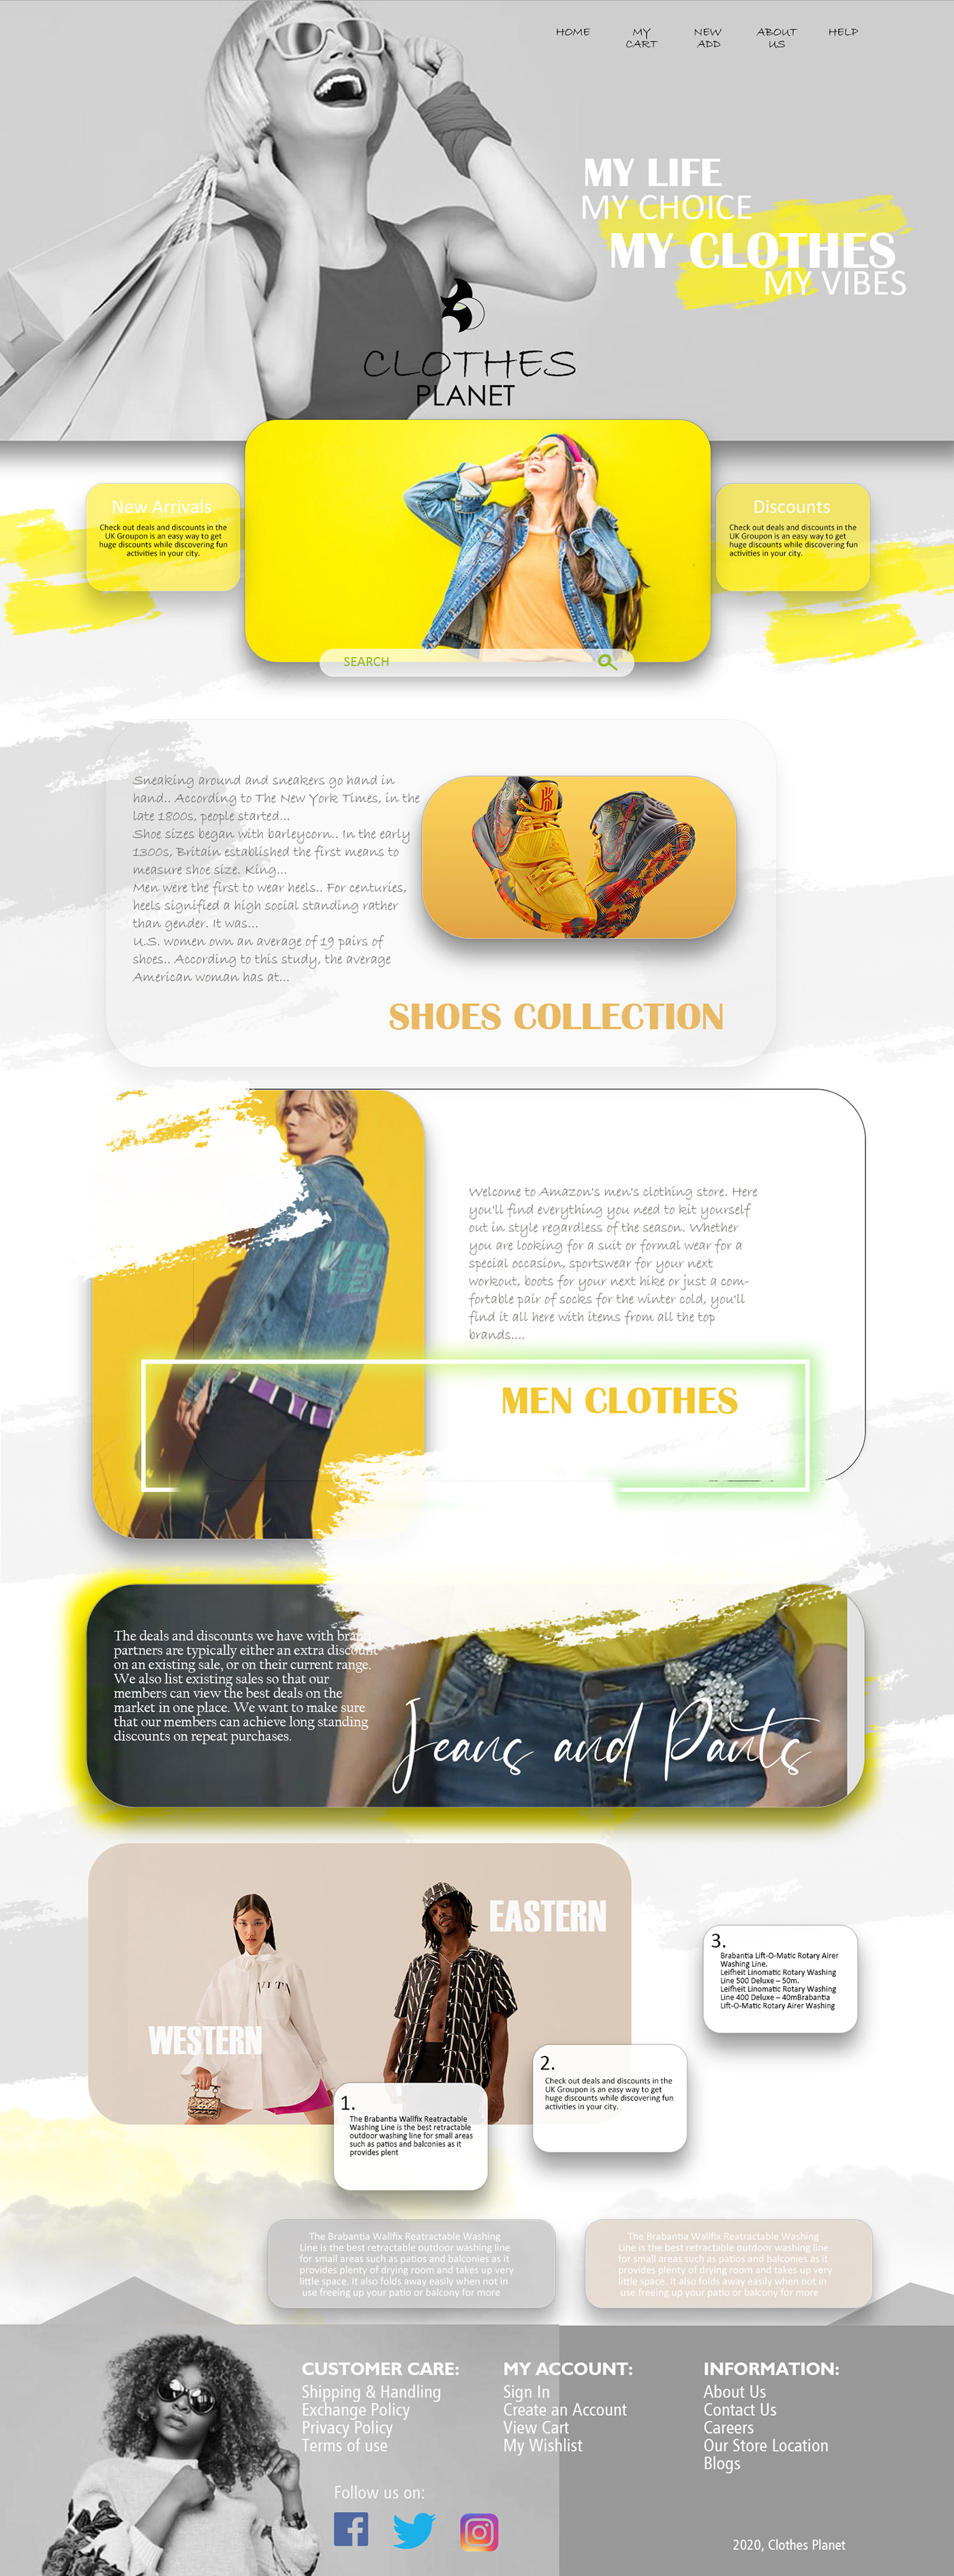 clothes Onlineshop photoshop webpage